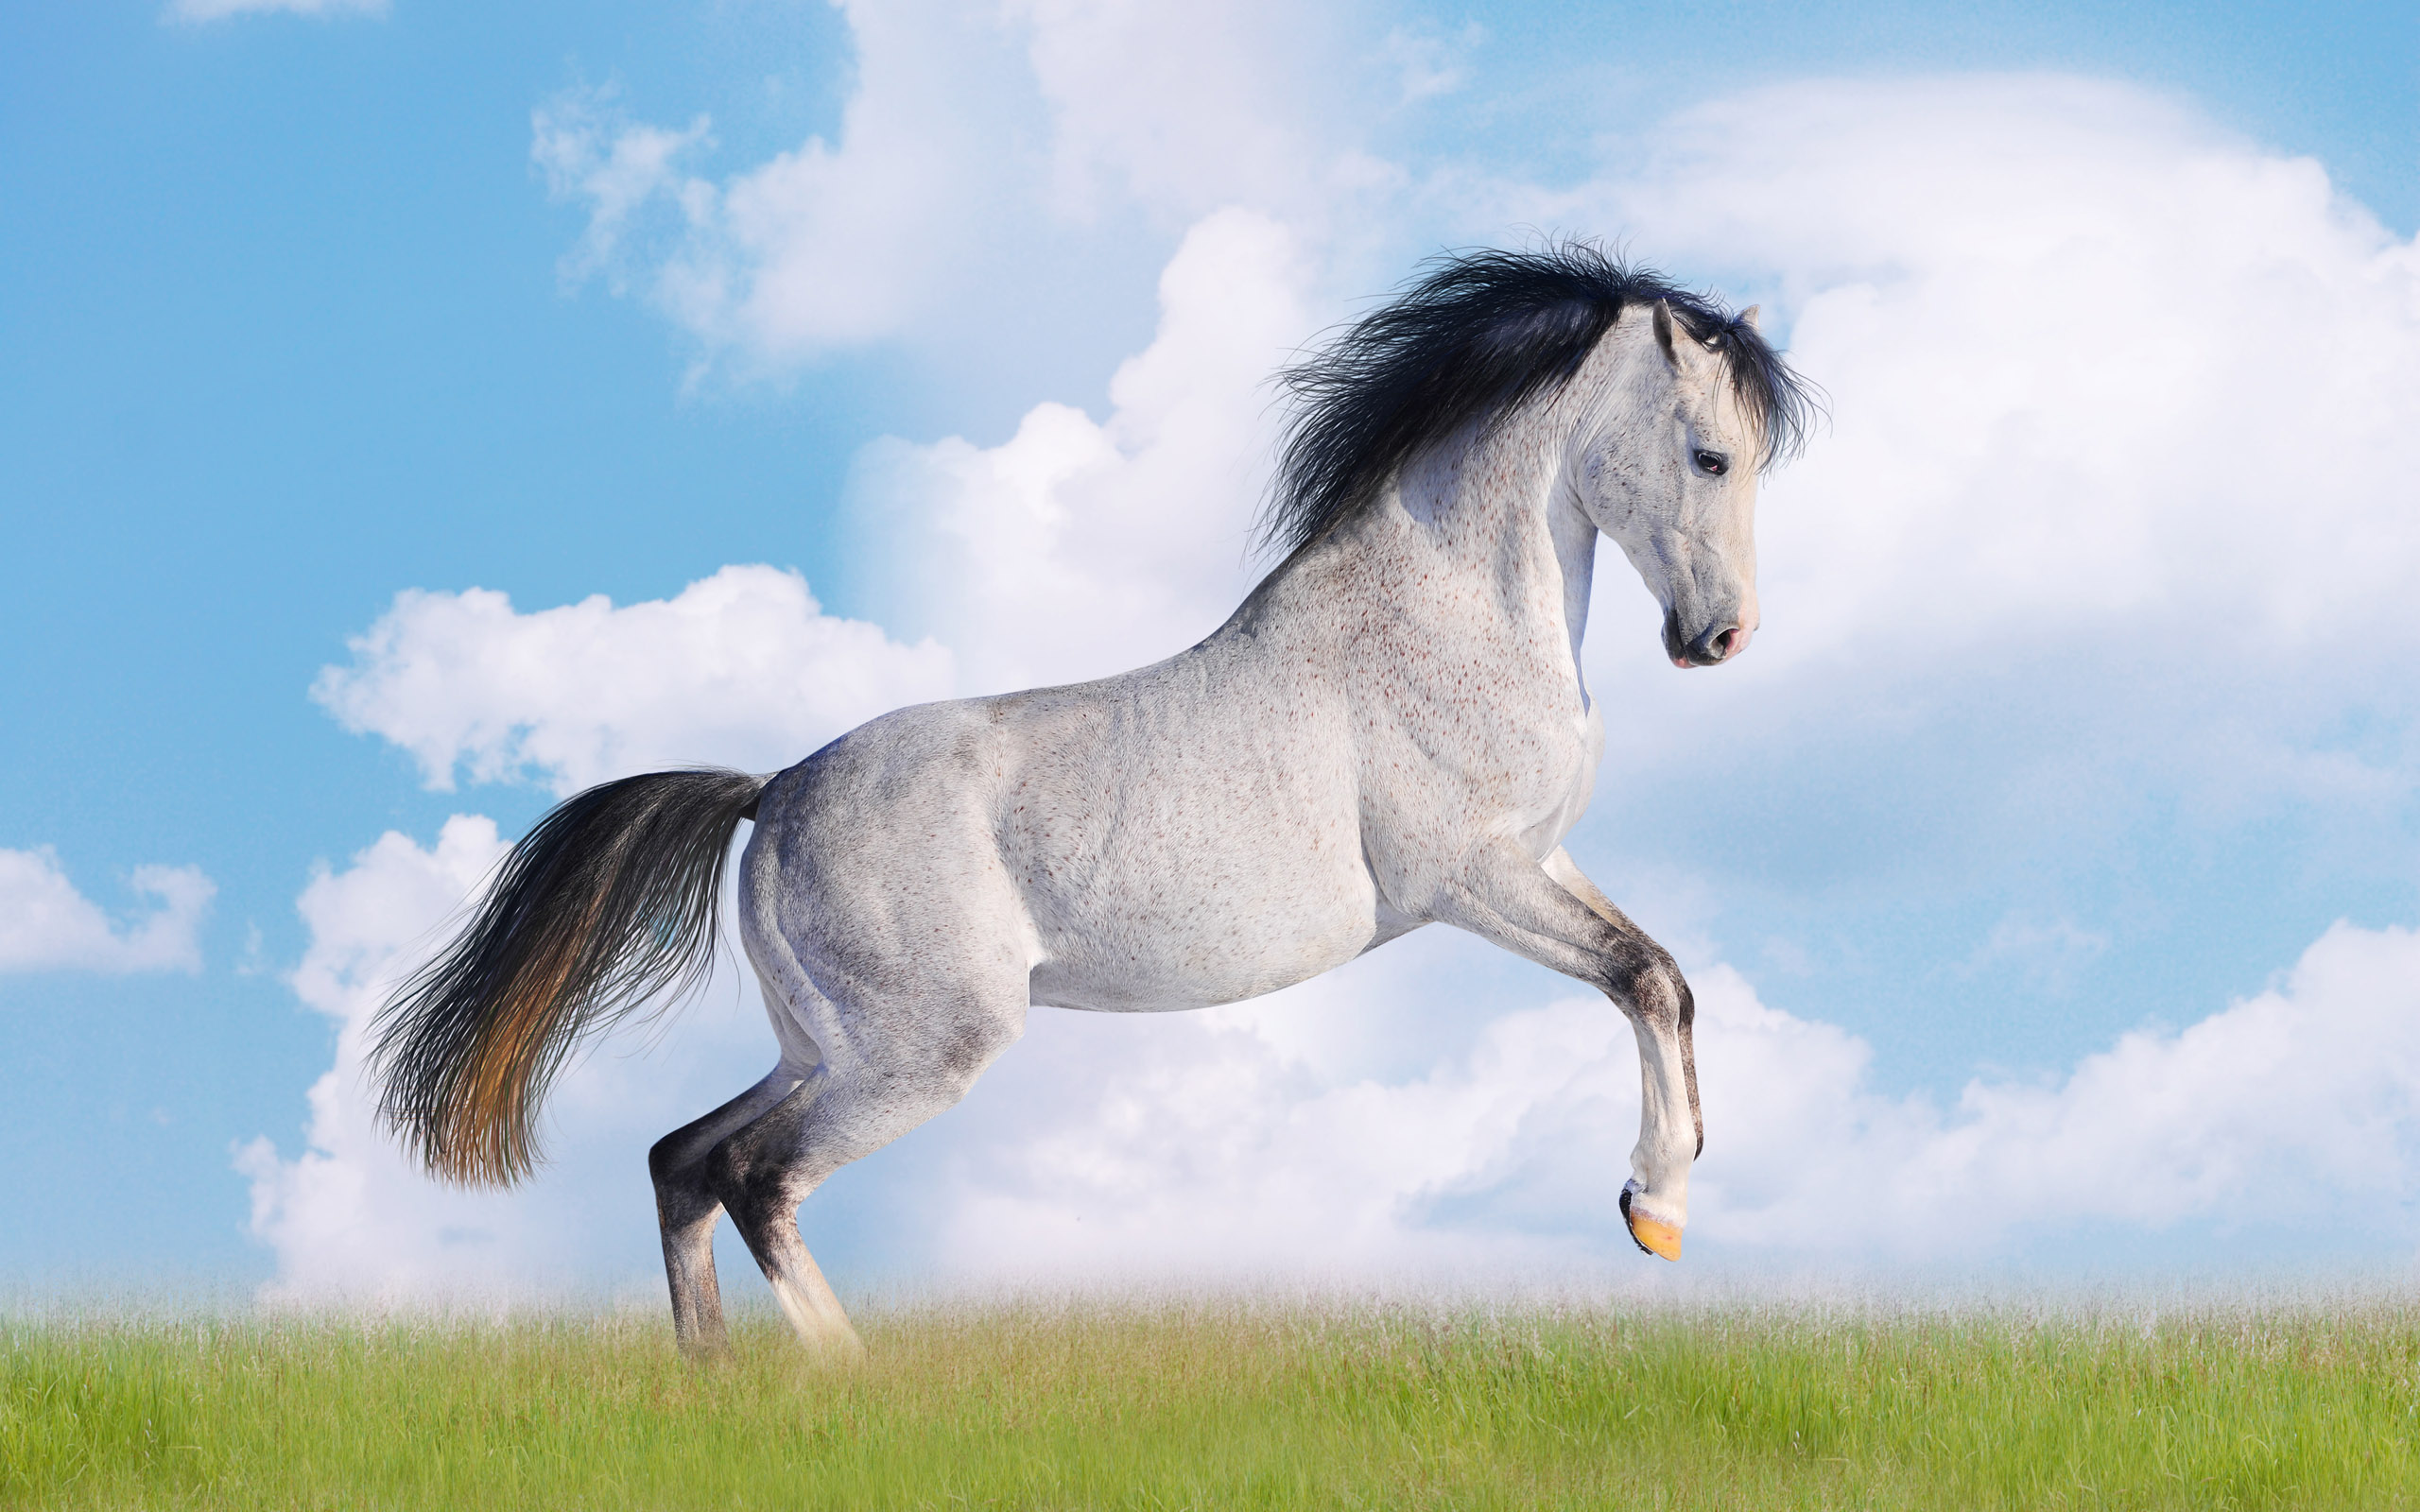 gray horse ongrass, photo, desktop wallpapers, horse